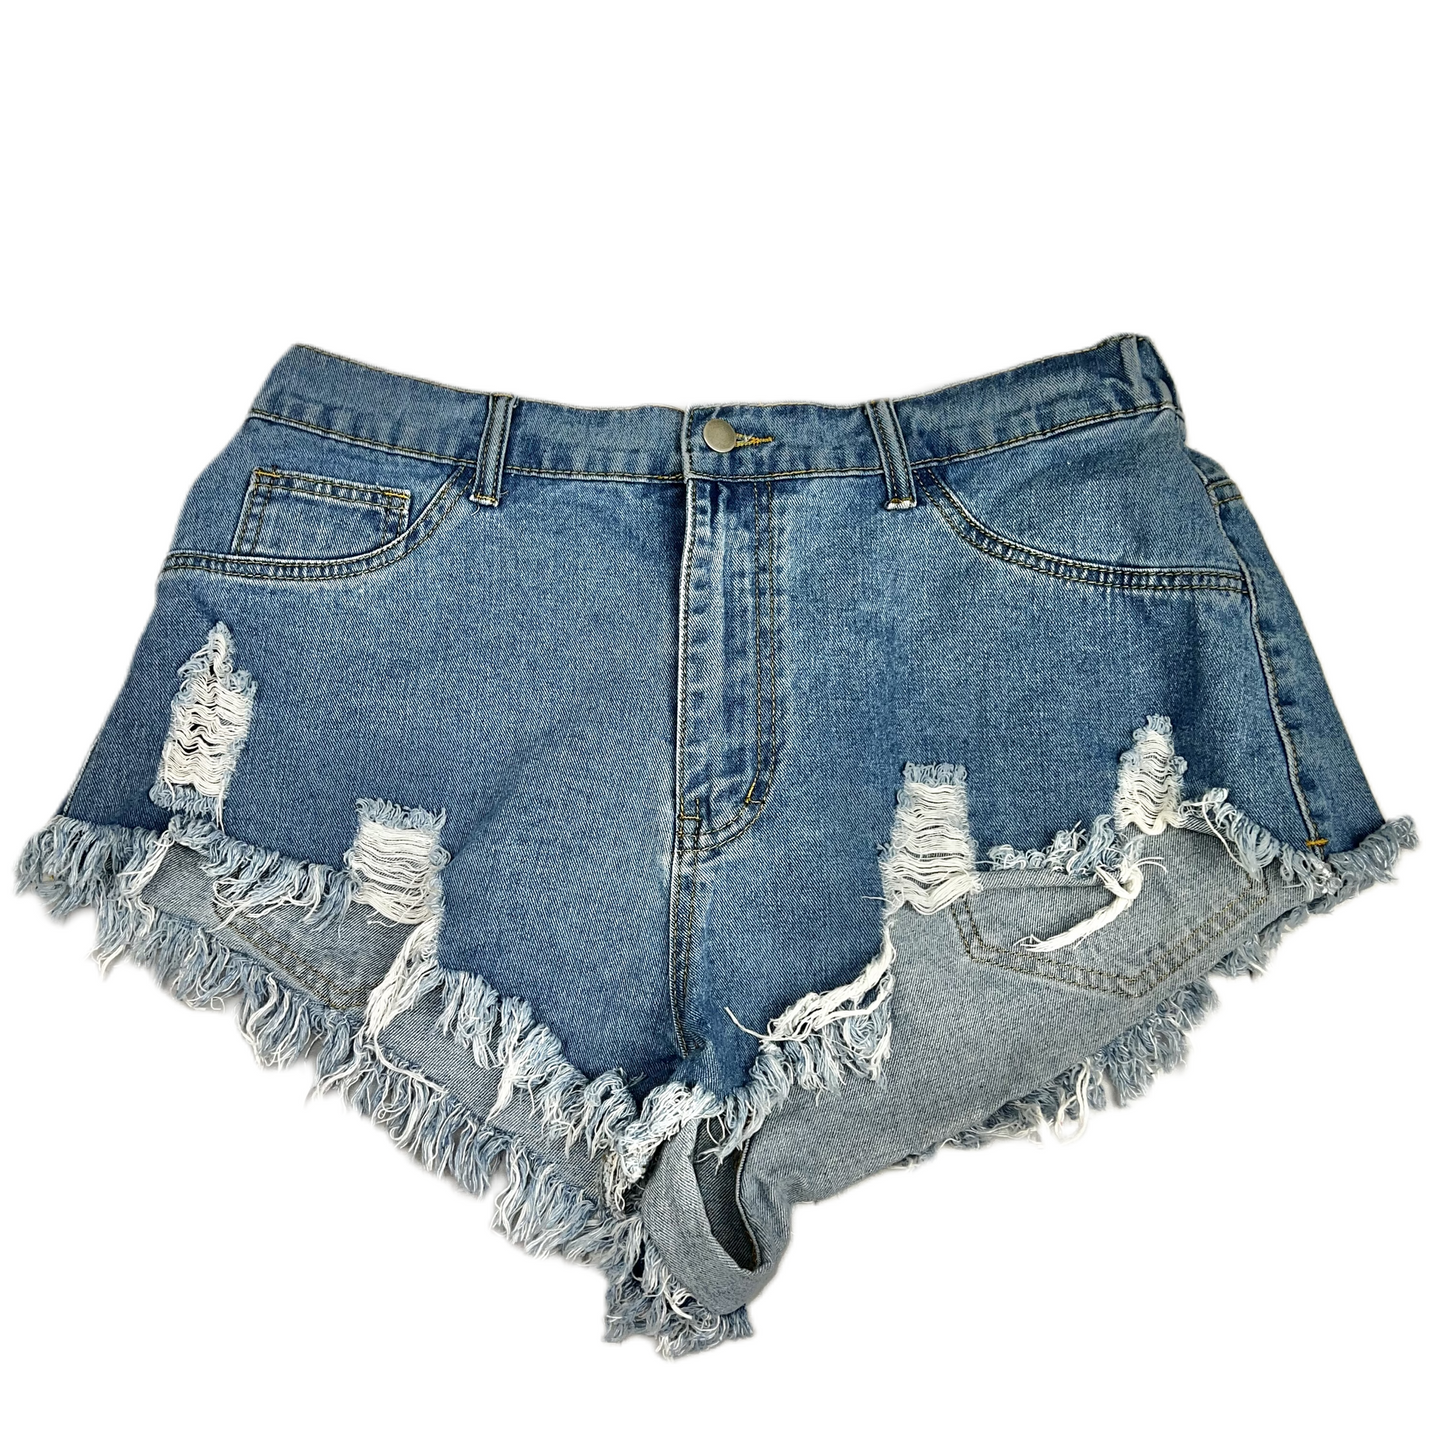 Blue Denim Shorts By Shein, Size: 1x